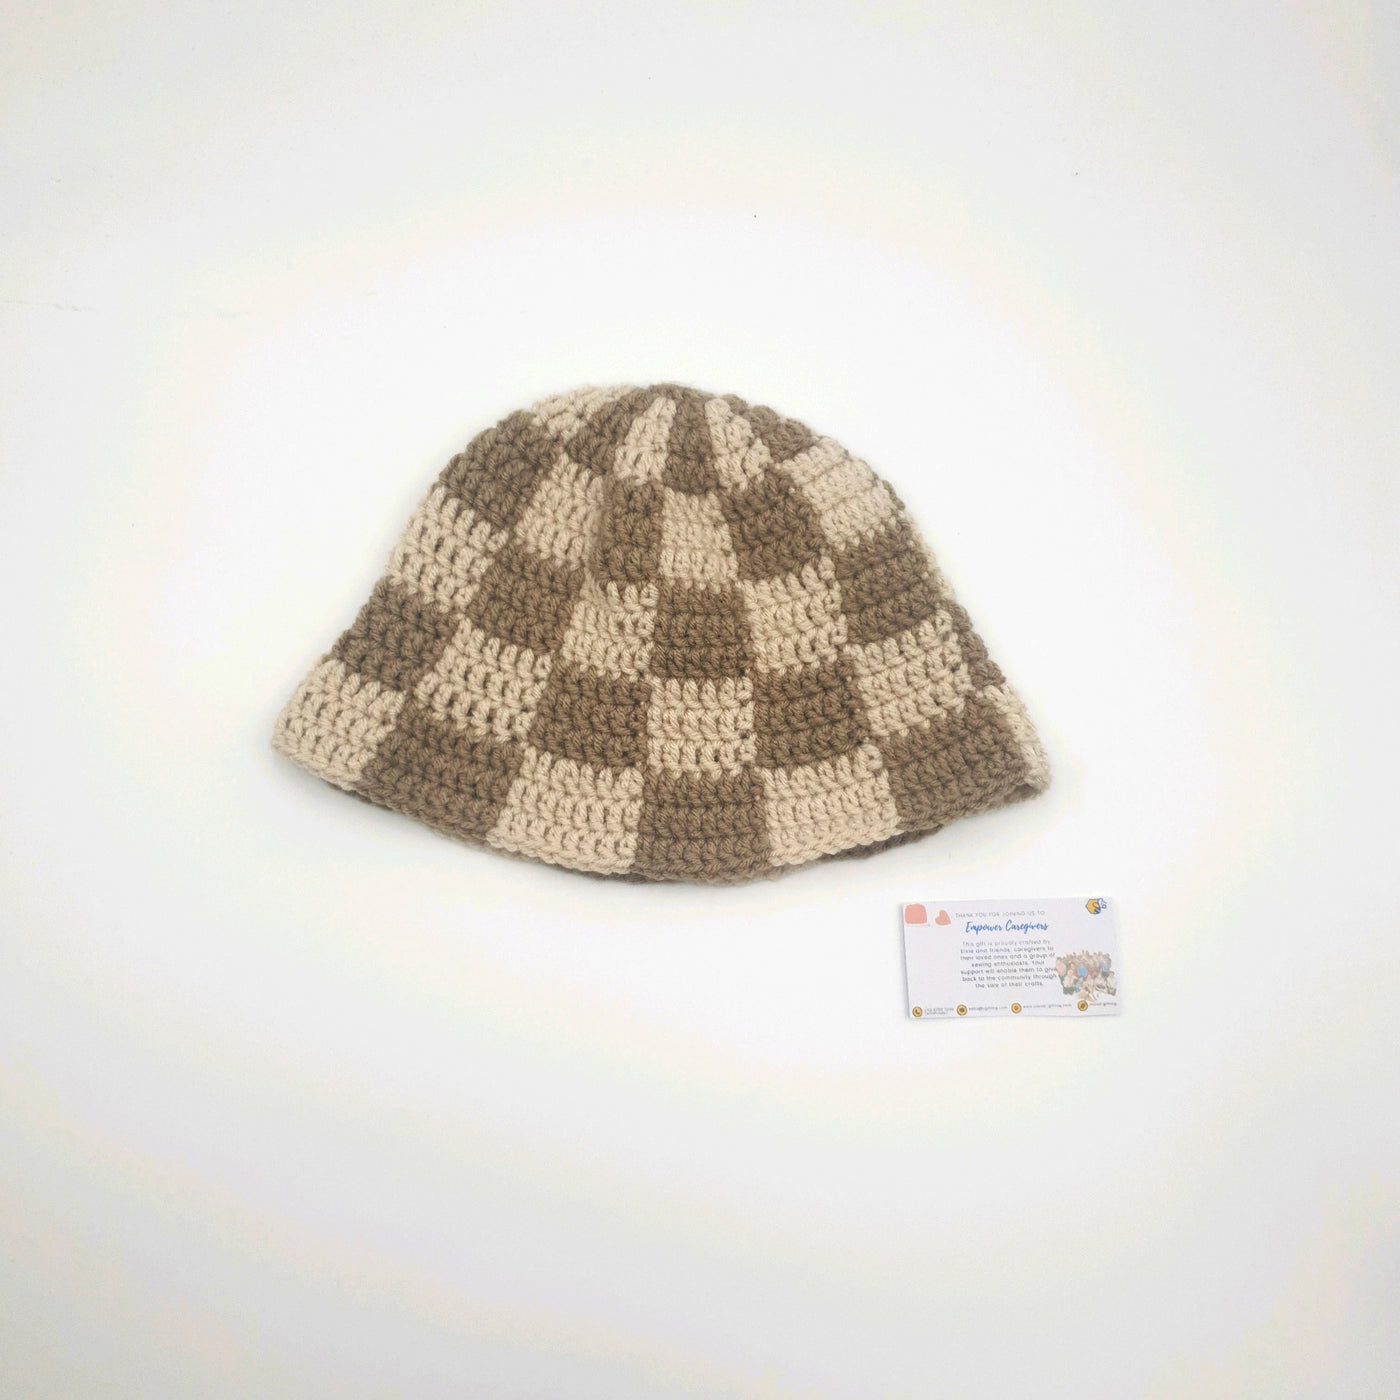 Checkered Crocheted Bucket Hat (Big)